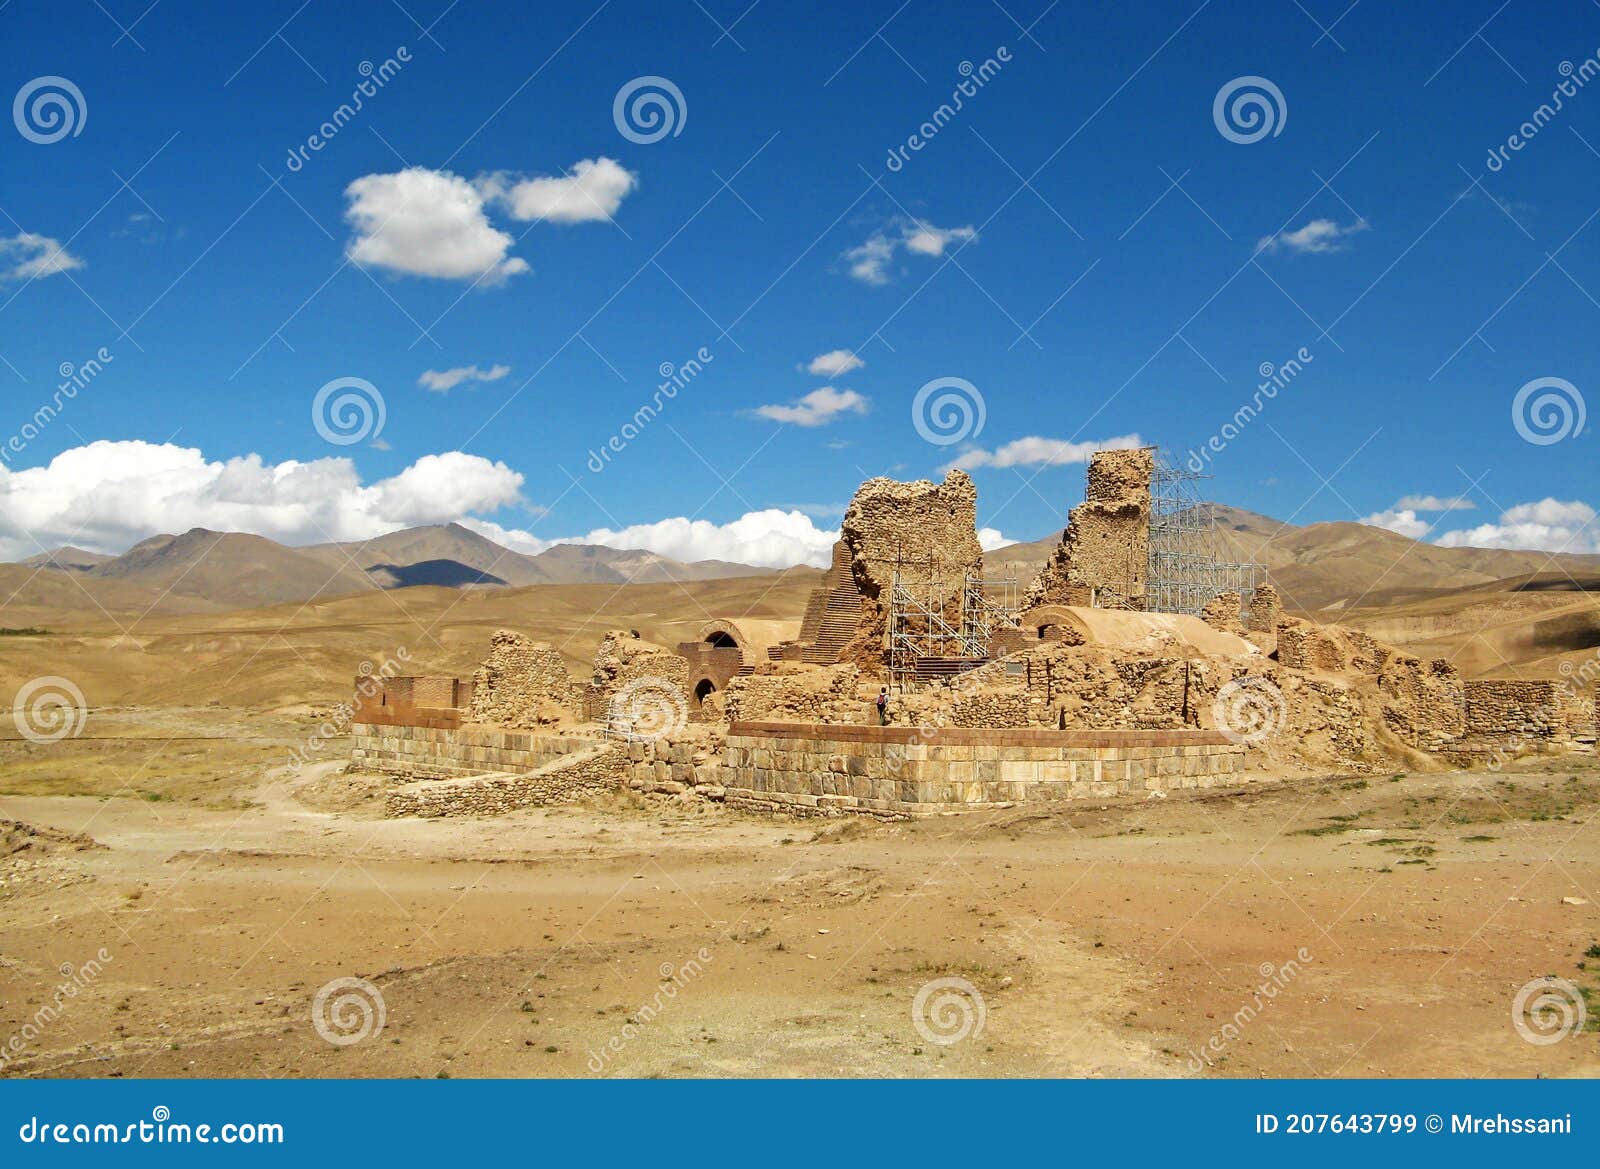 takht-e soleiman ruins , unesco world heritage site in takab , iran